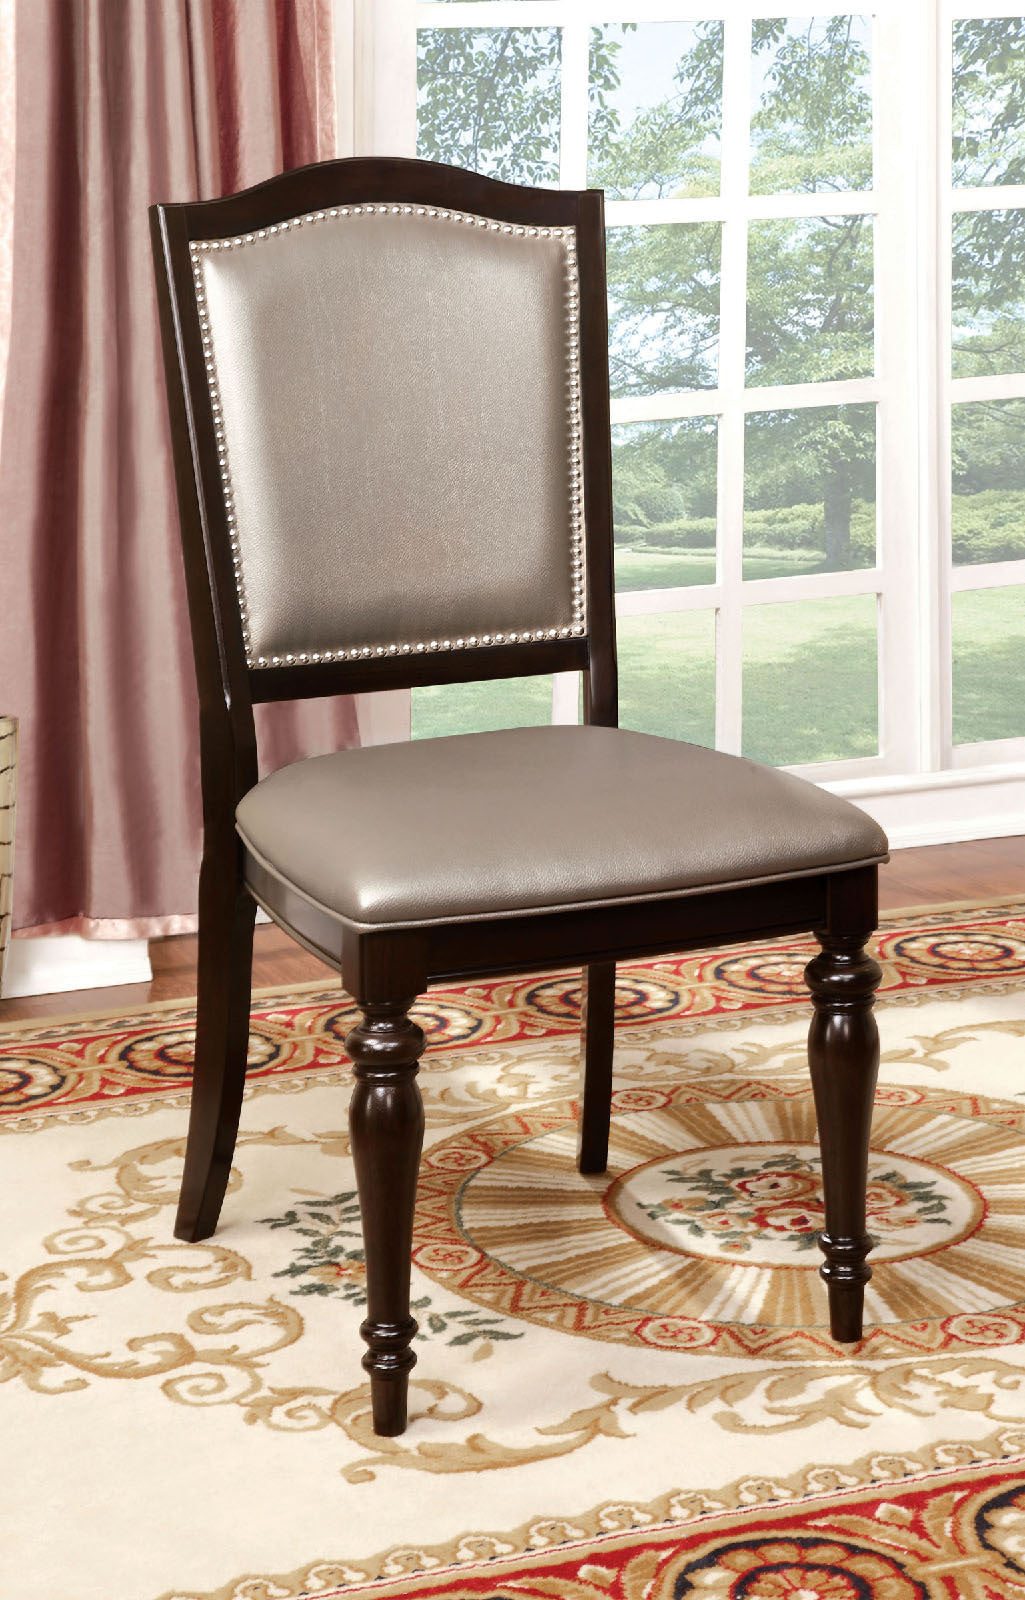 Transitional Set of 2 Side Chairs Dark Walnut Pewter pewter-dining room-modern-transitional-dining